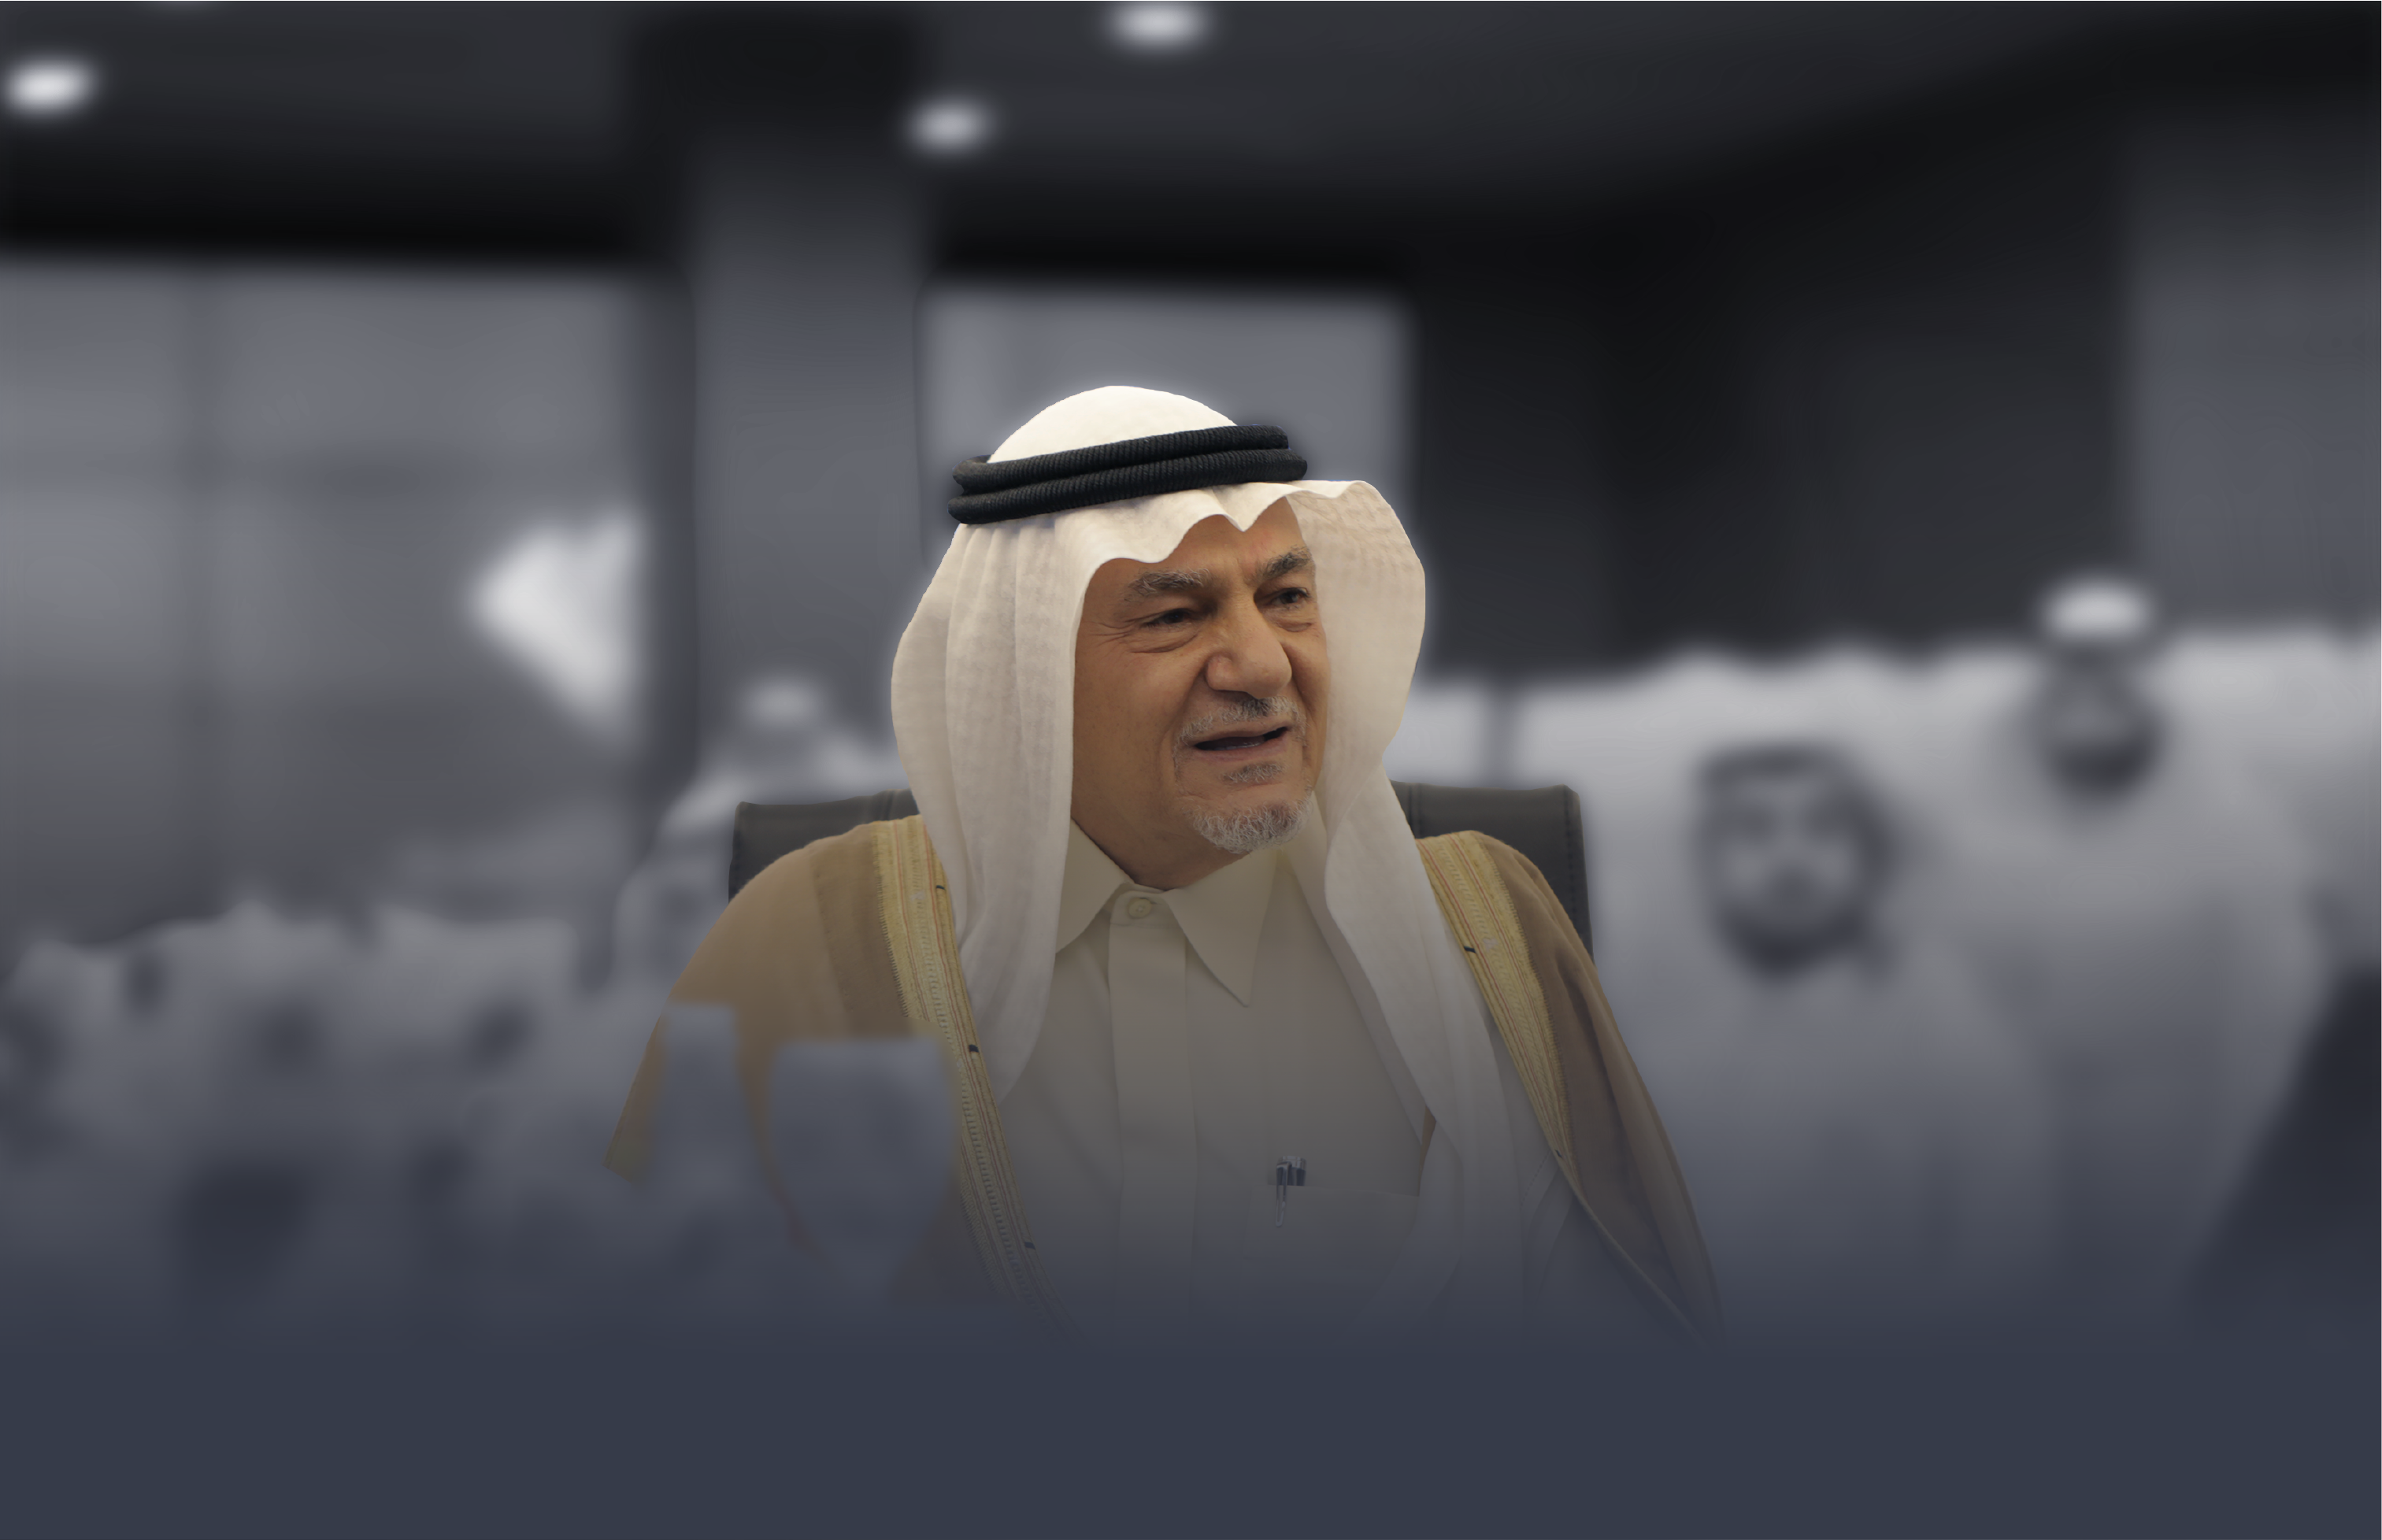 His Royal Highness Prince Turki bin Faisal Al Saud